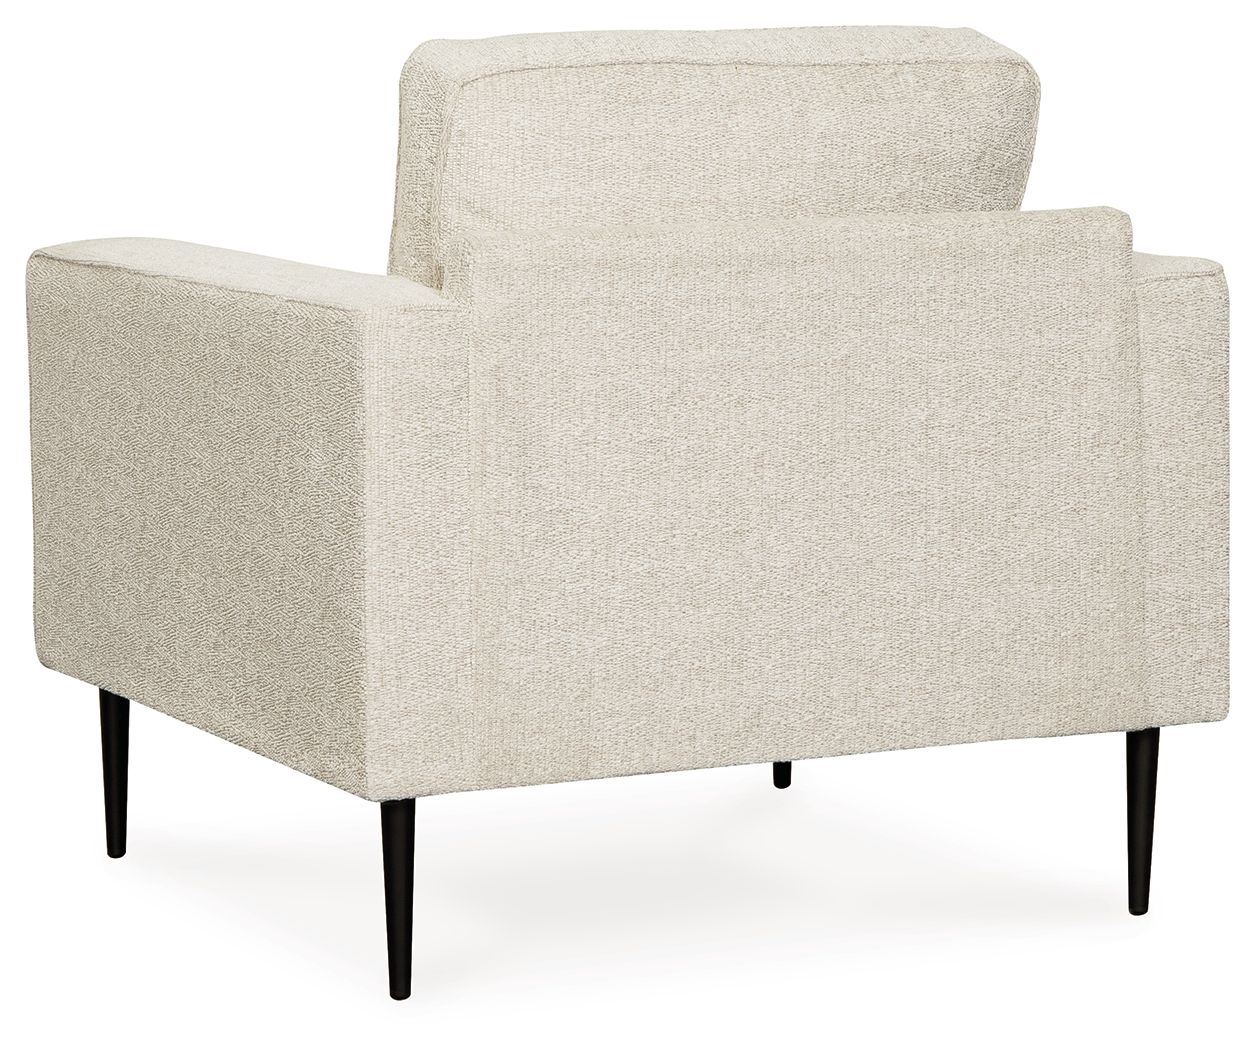 Hazela - Sandstone - 2 Pc. - Chair, Ottoman Tony's Home Furnishings Furniture. Beds. Dressers. Sofas.